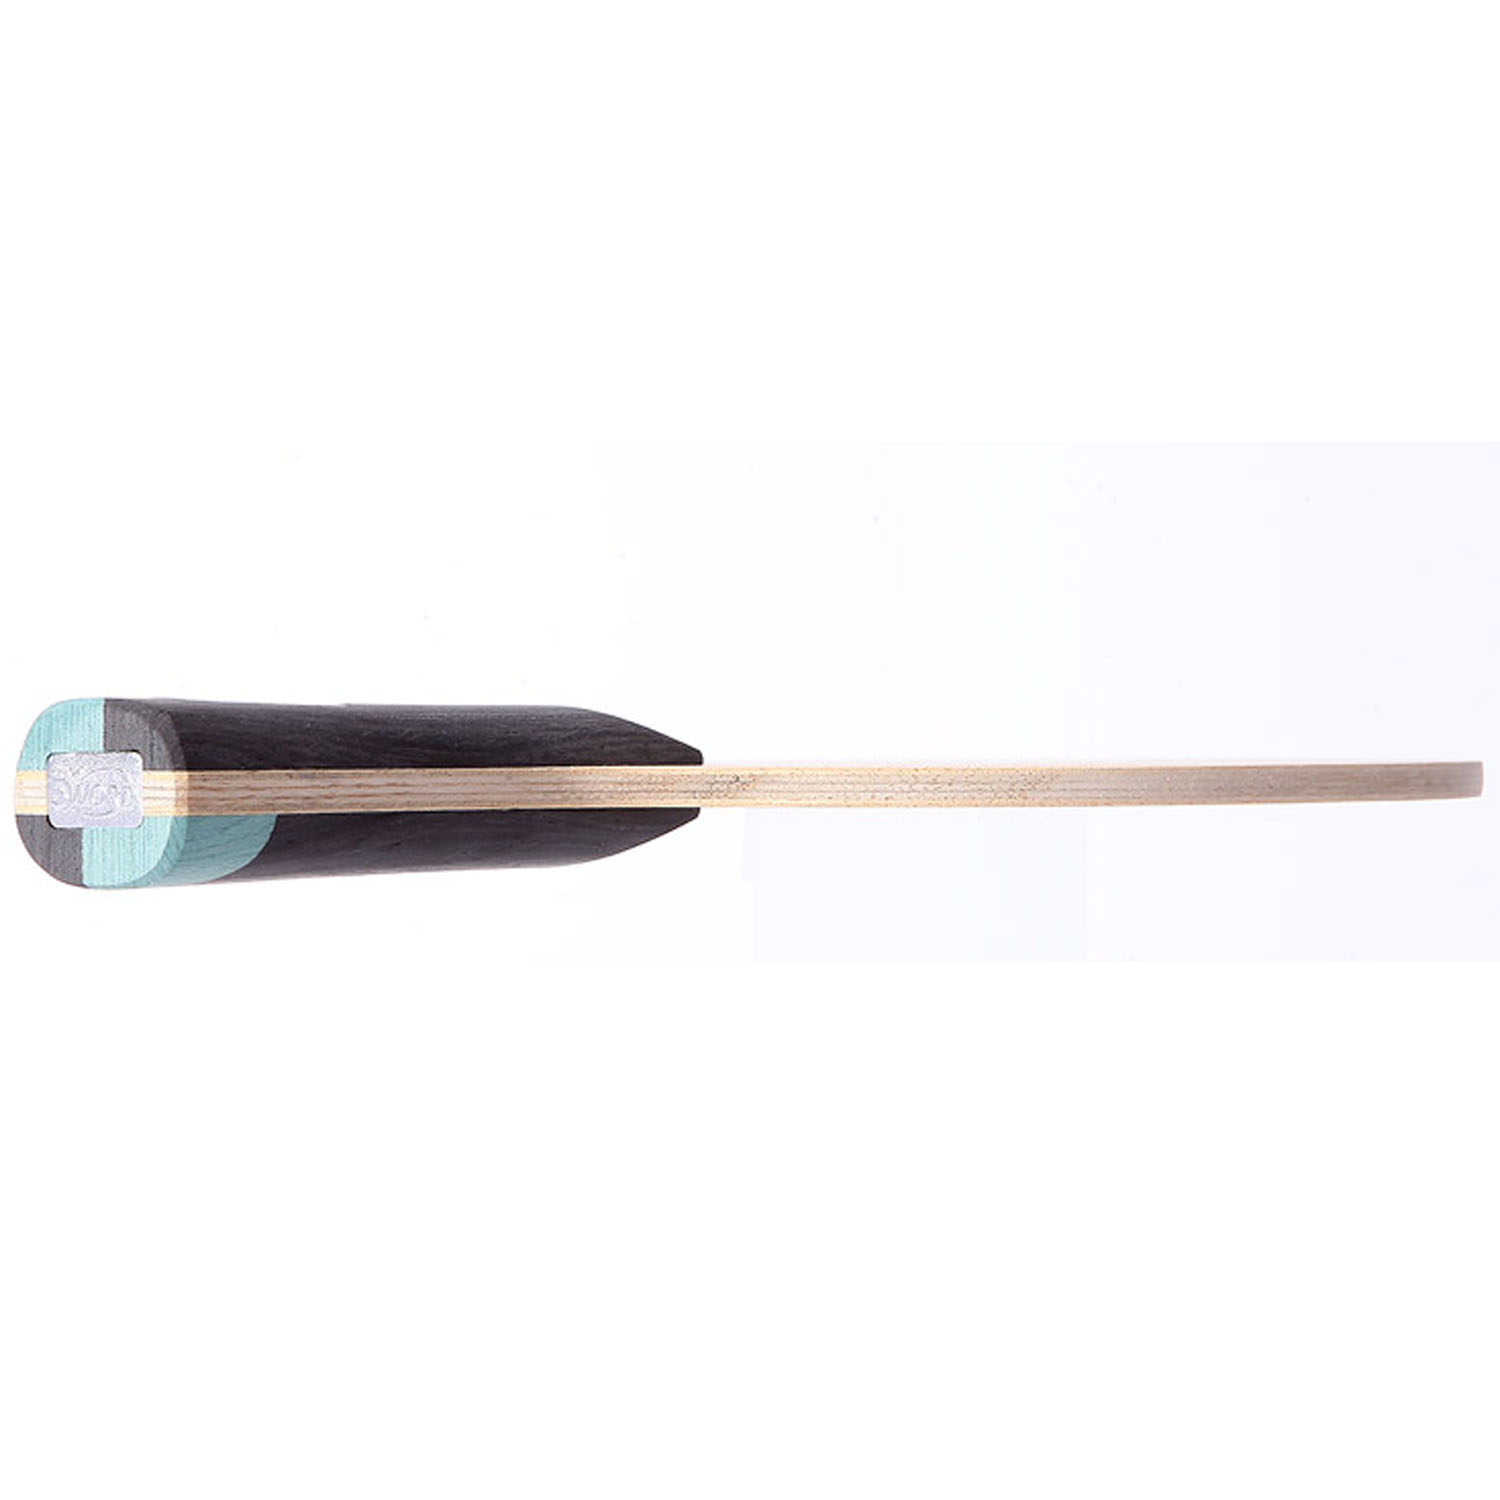 Sword 309 Chop Type straight handle table tennis pingpong blade